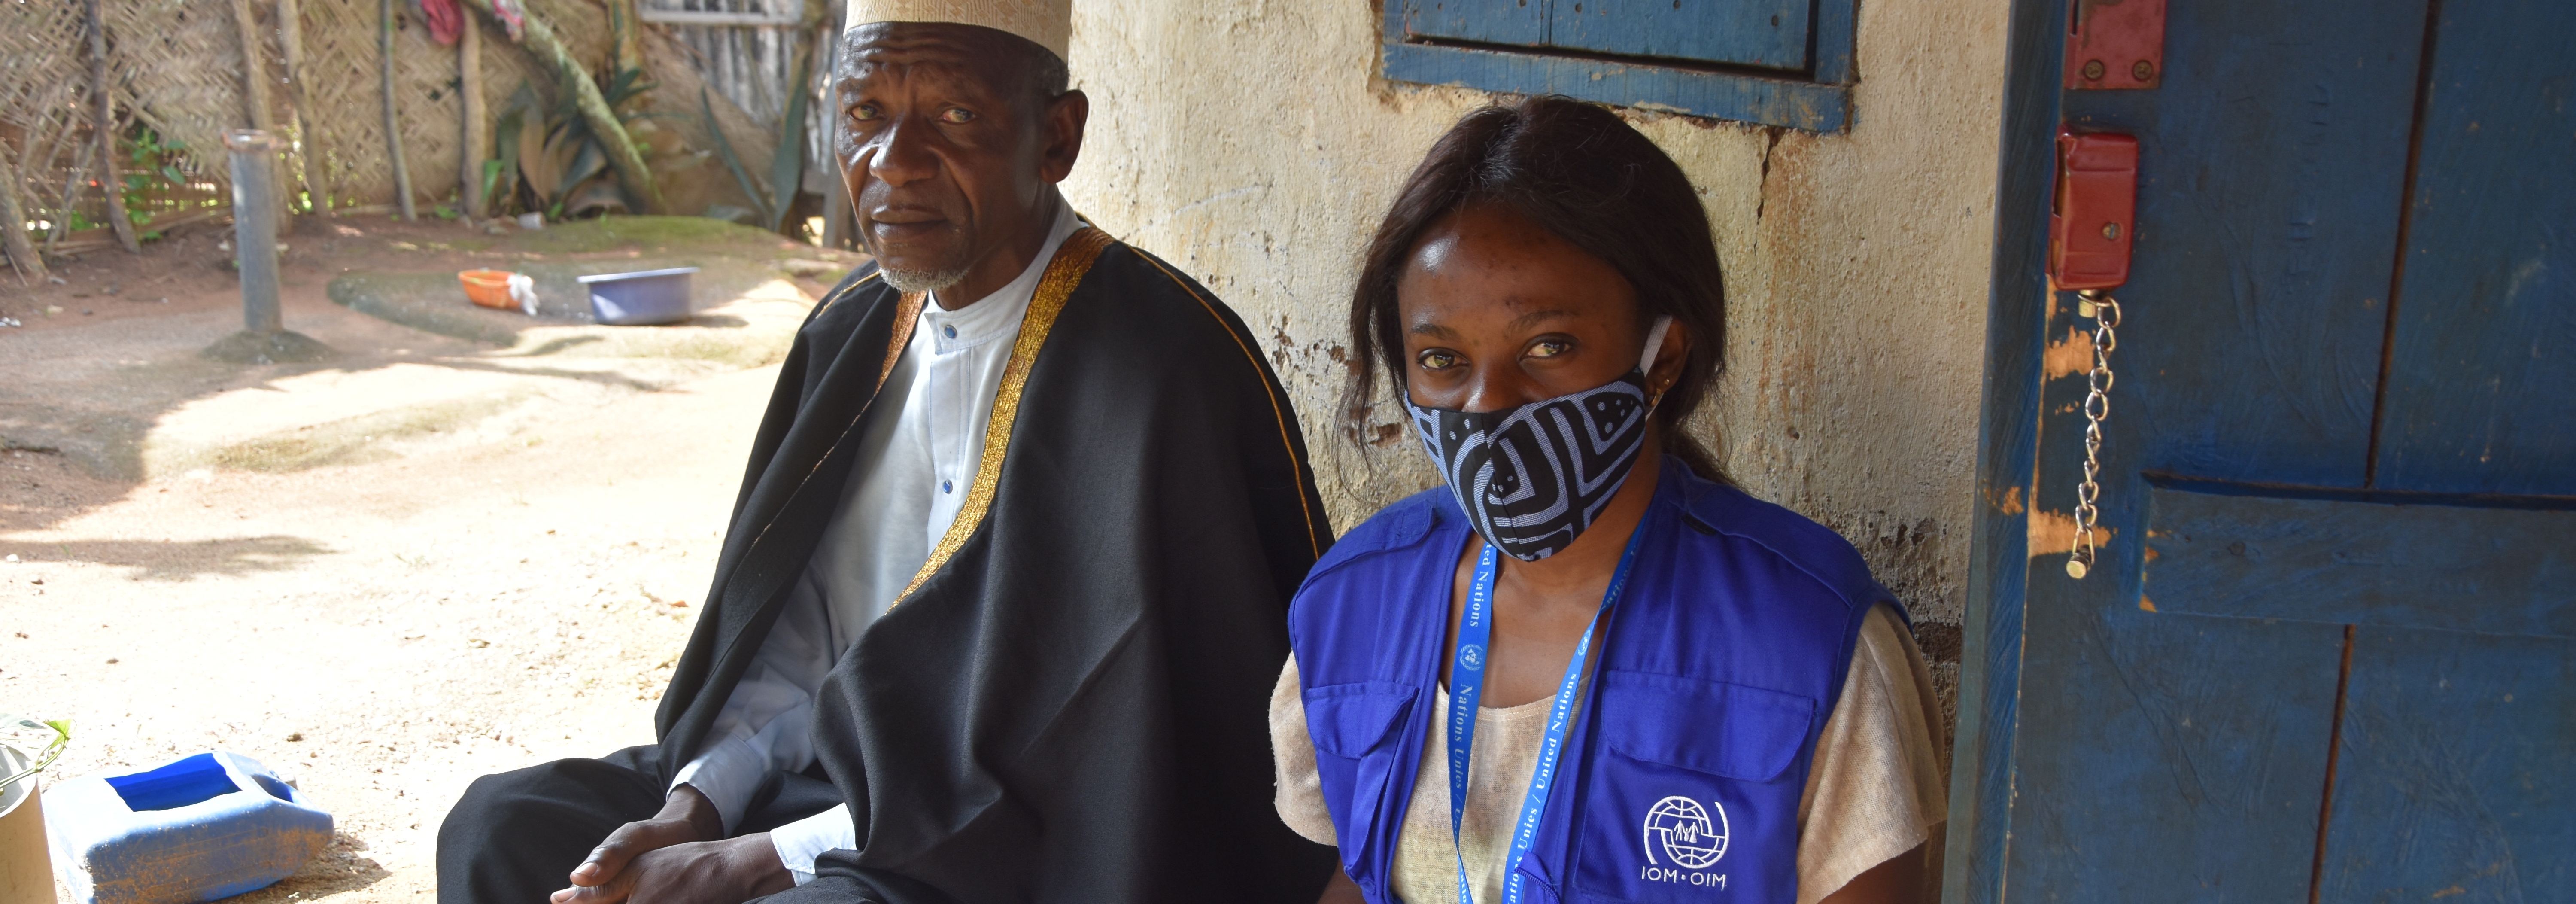 IOM Staff Speak to Community Members During Monitoring Visit, East Region, Cameroon. @ IOM Cameroon, 2020